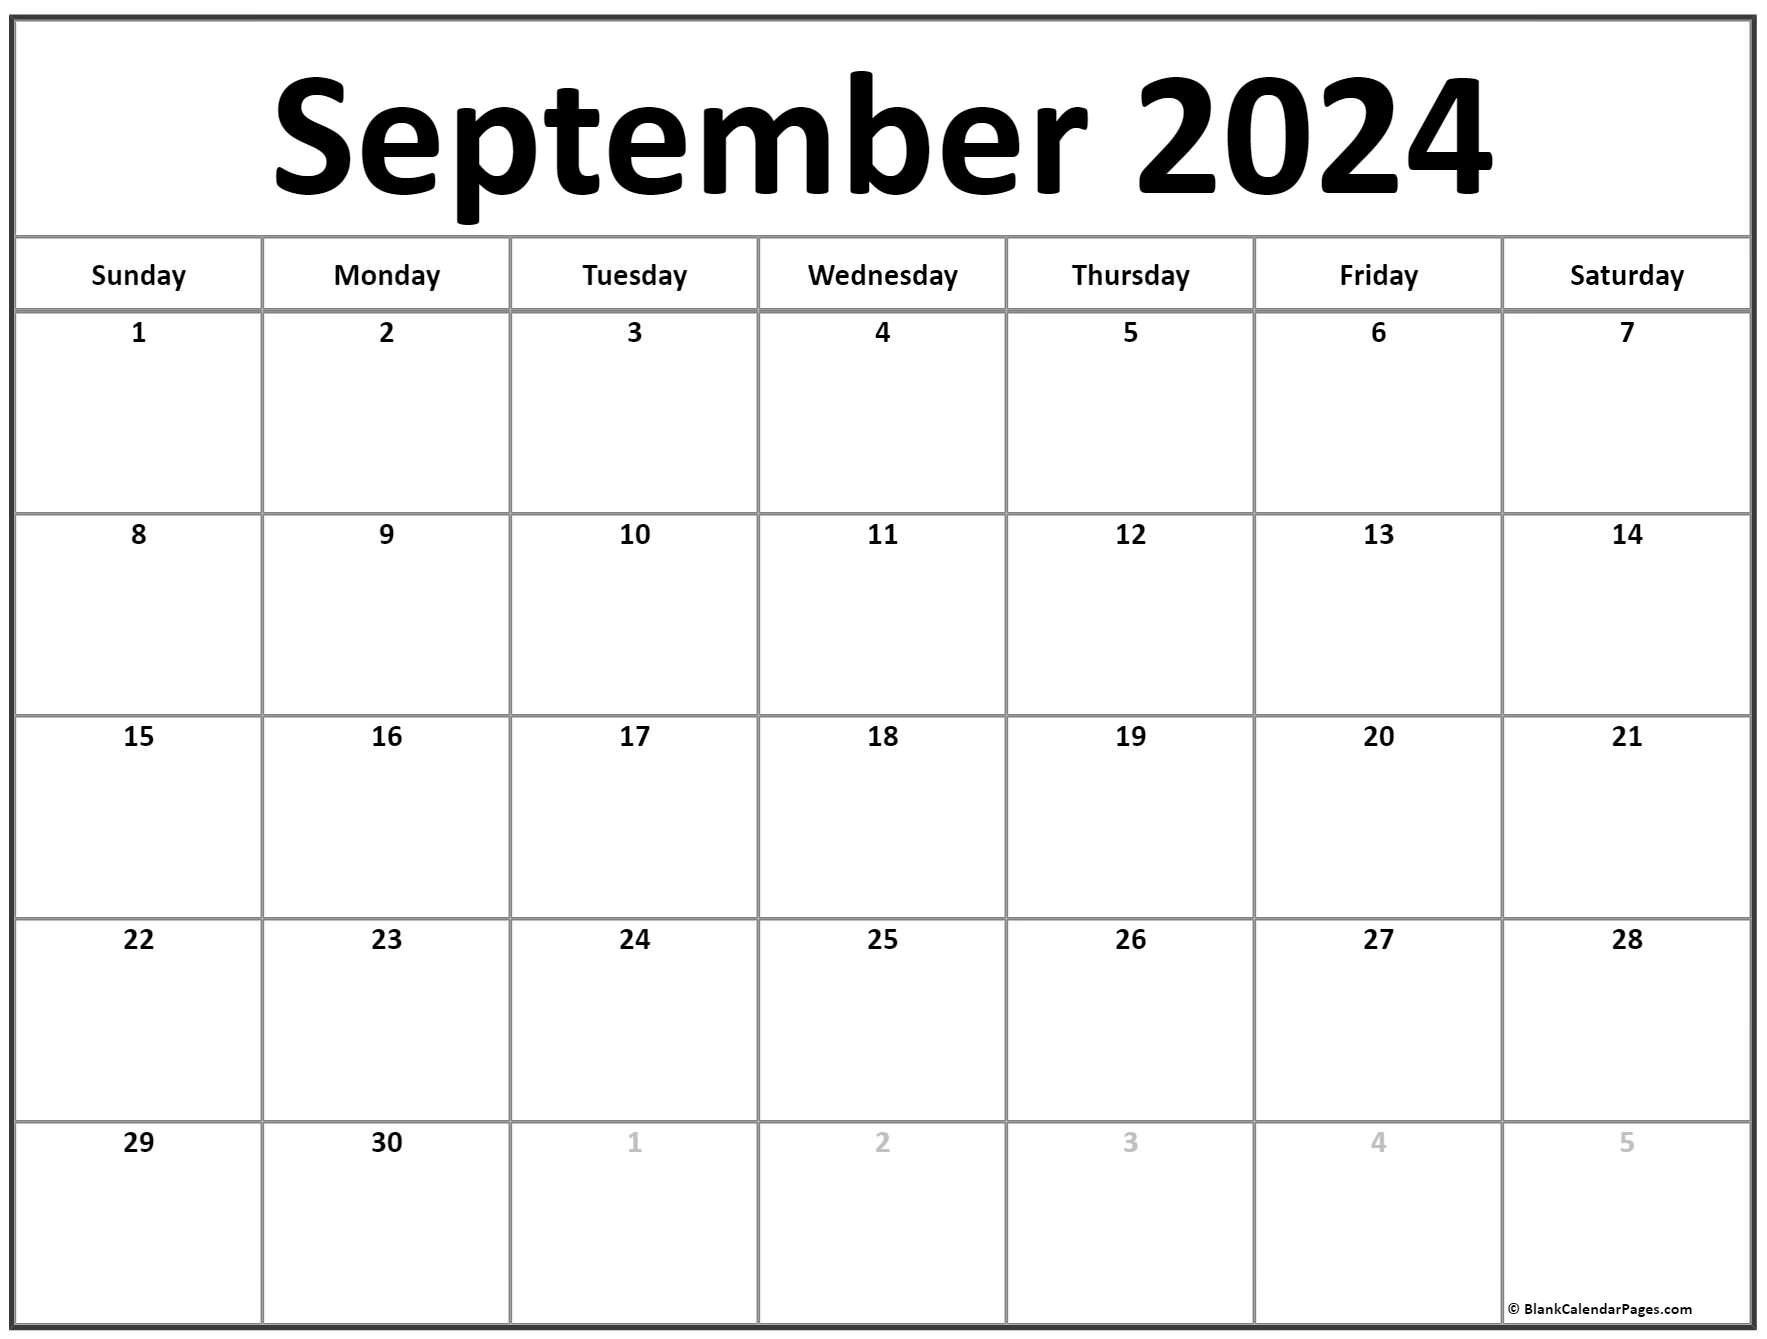 September 2022 Calendar September 2022 Calendar | Free Printable Calendar Templates